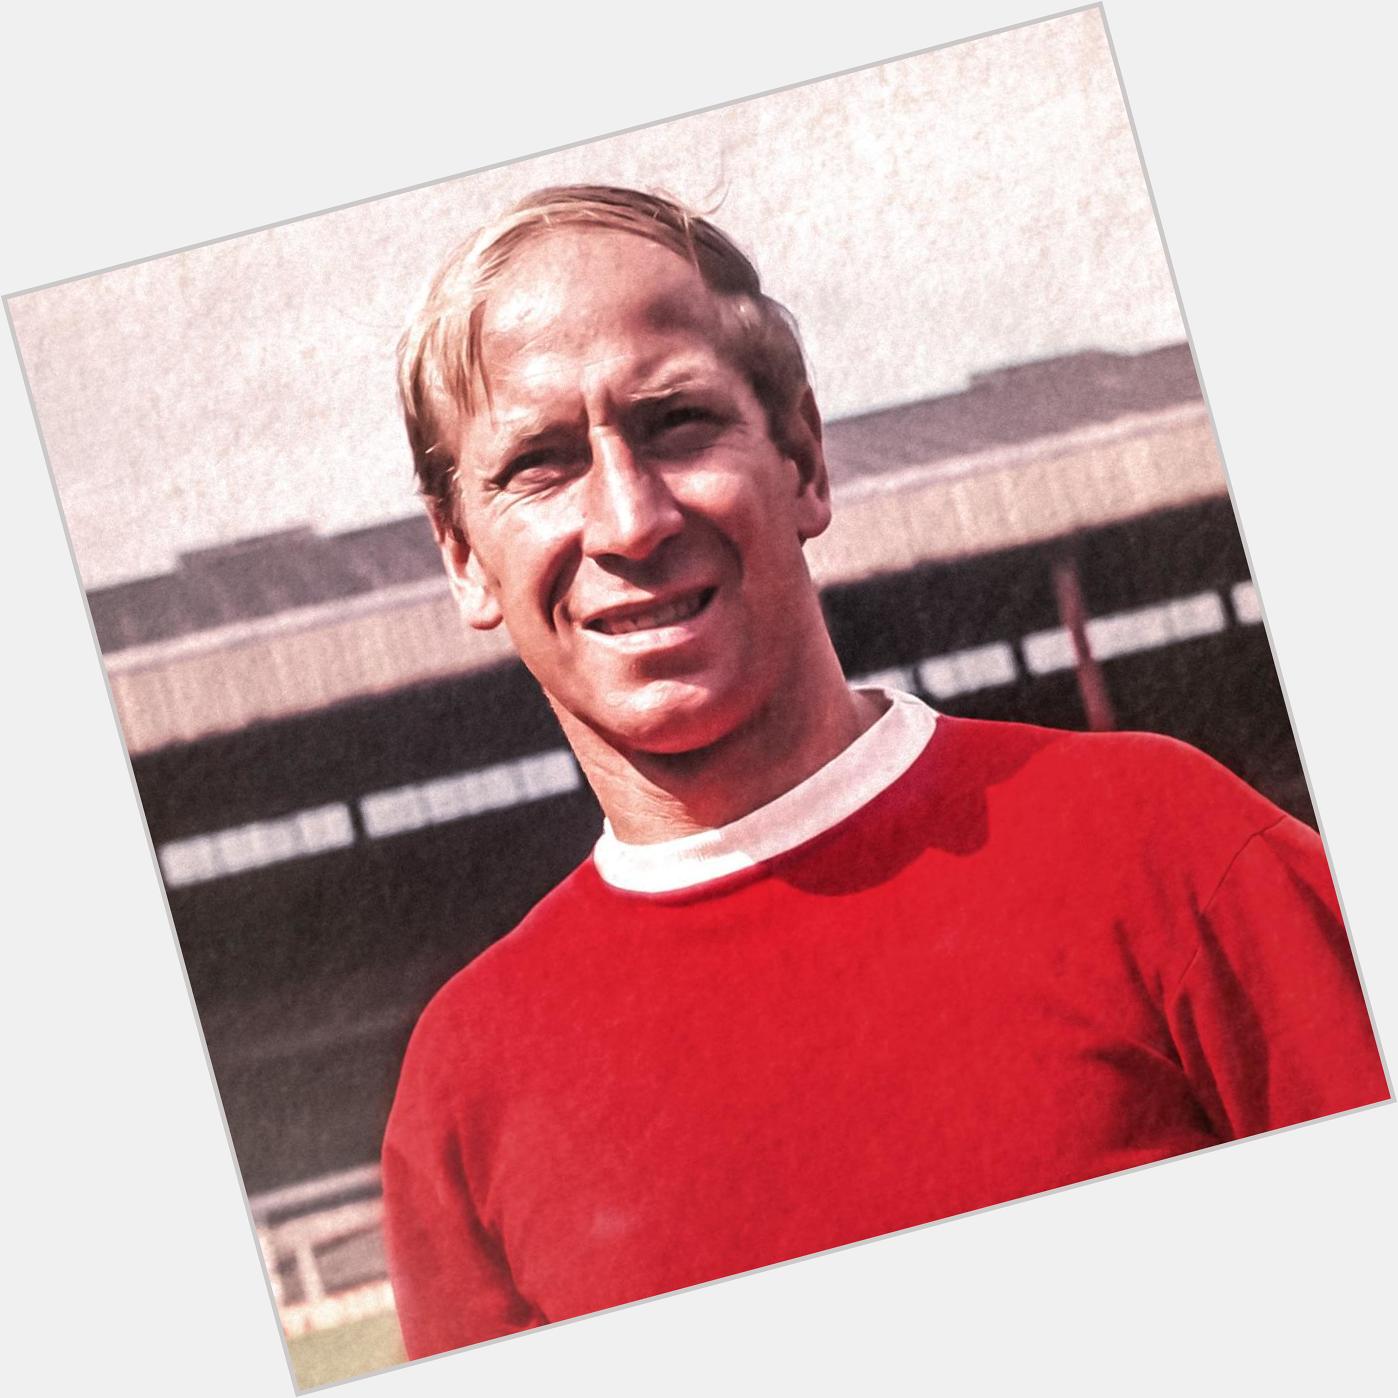 Happy birthday to the great Sir Bobby Charlton!  